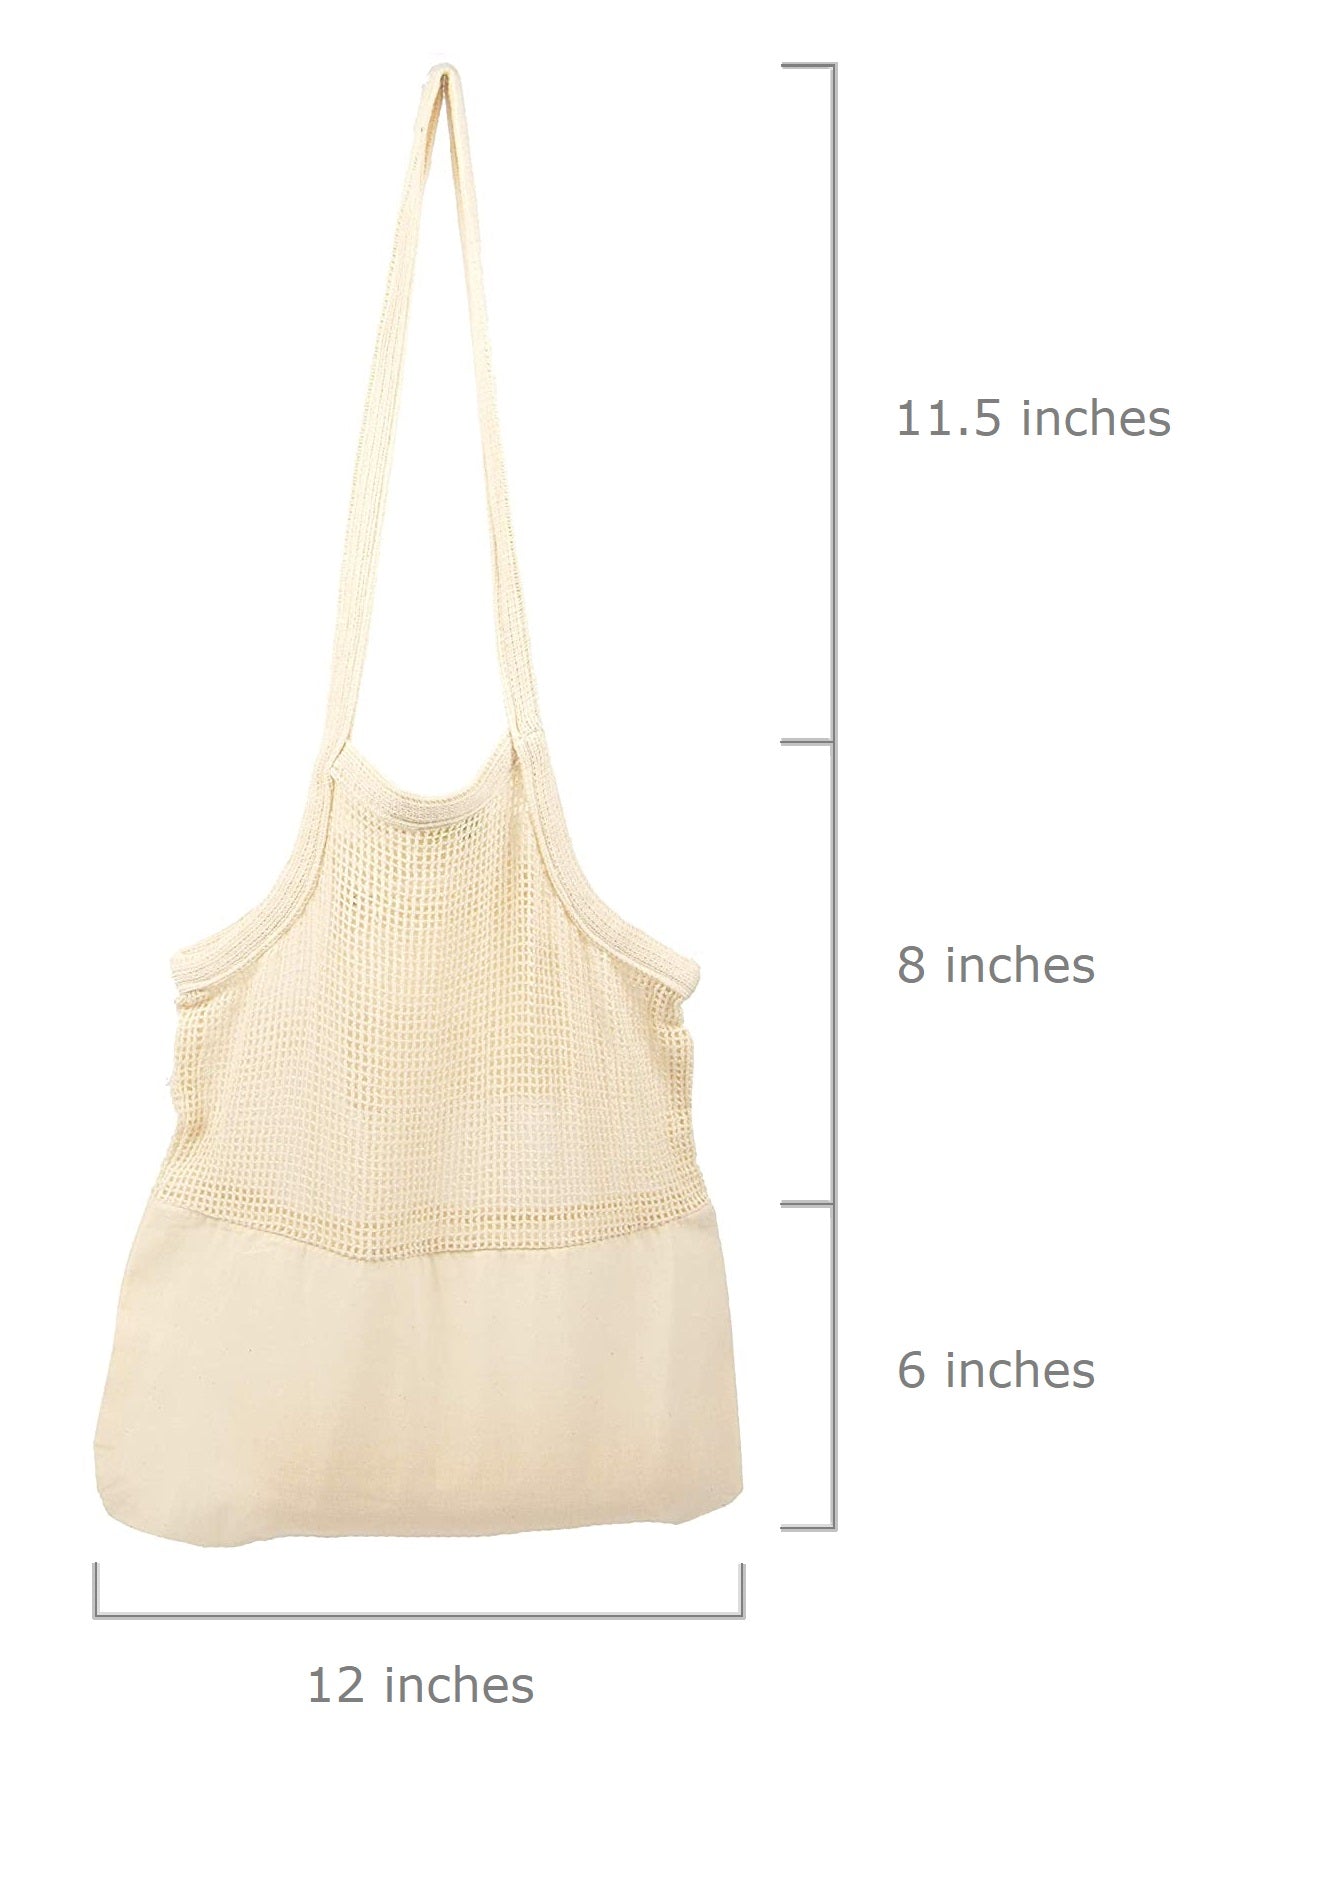 organic cotton mesh tote bag dimensions